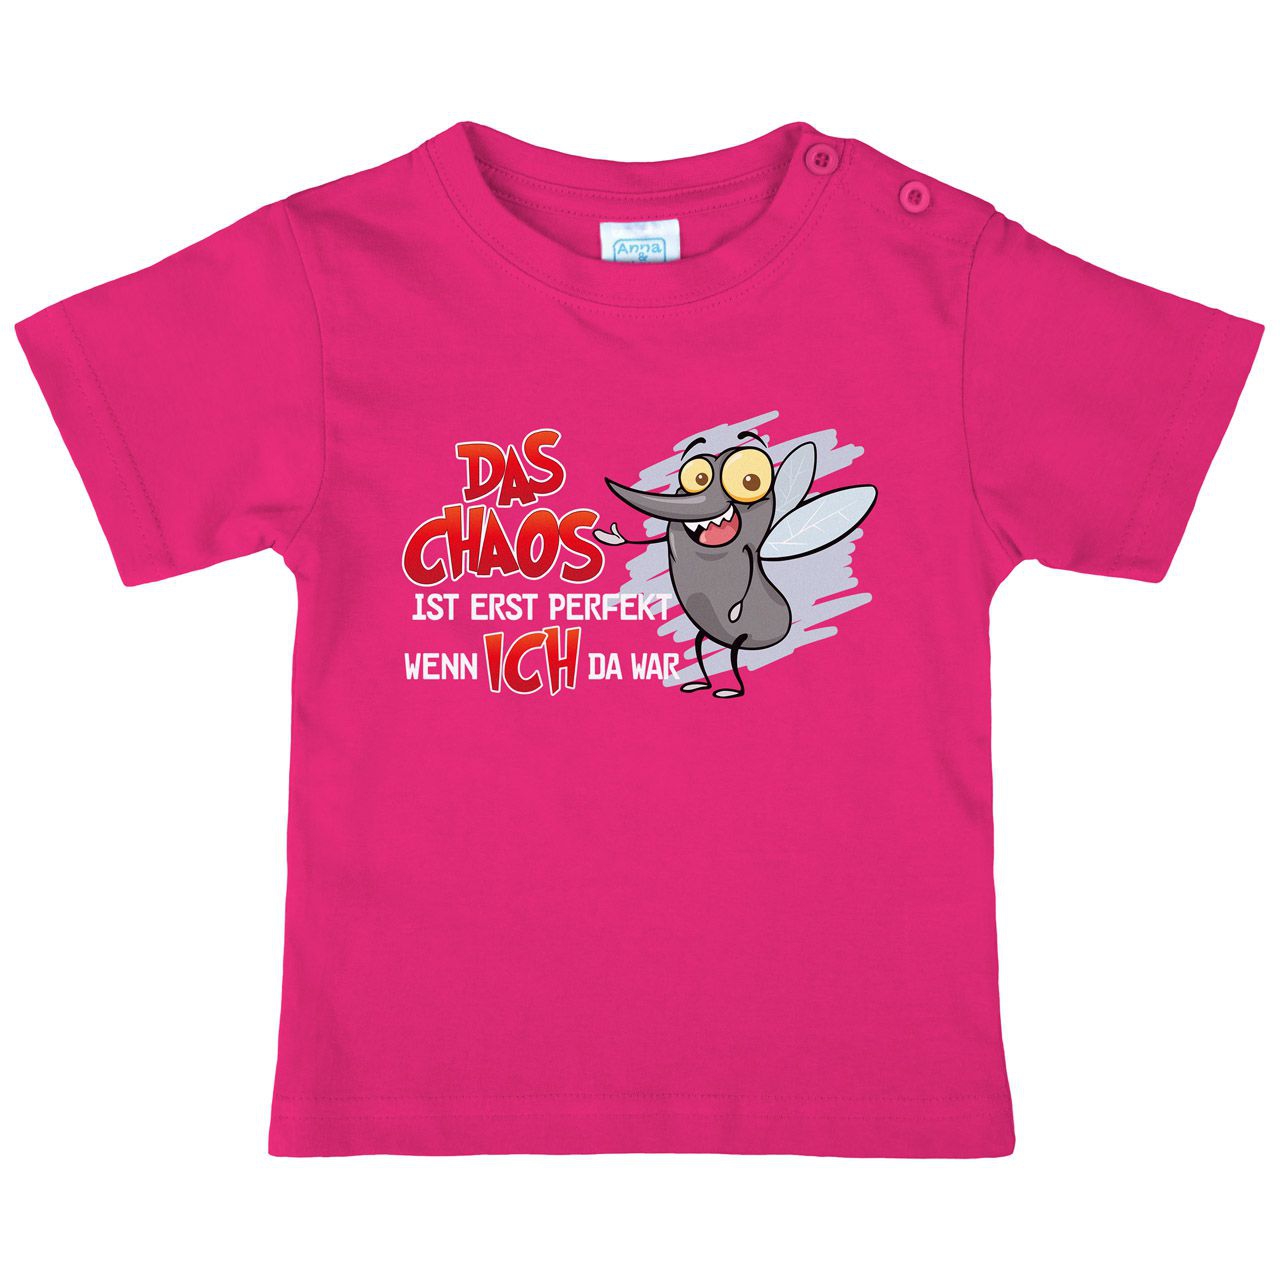 Das Chaos ist perfekt Kinder T-Shirt pink 80 / 86